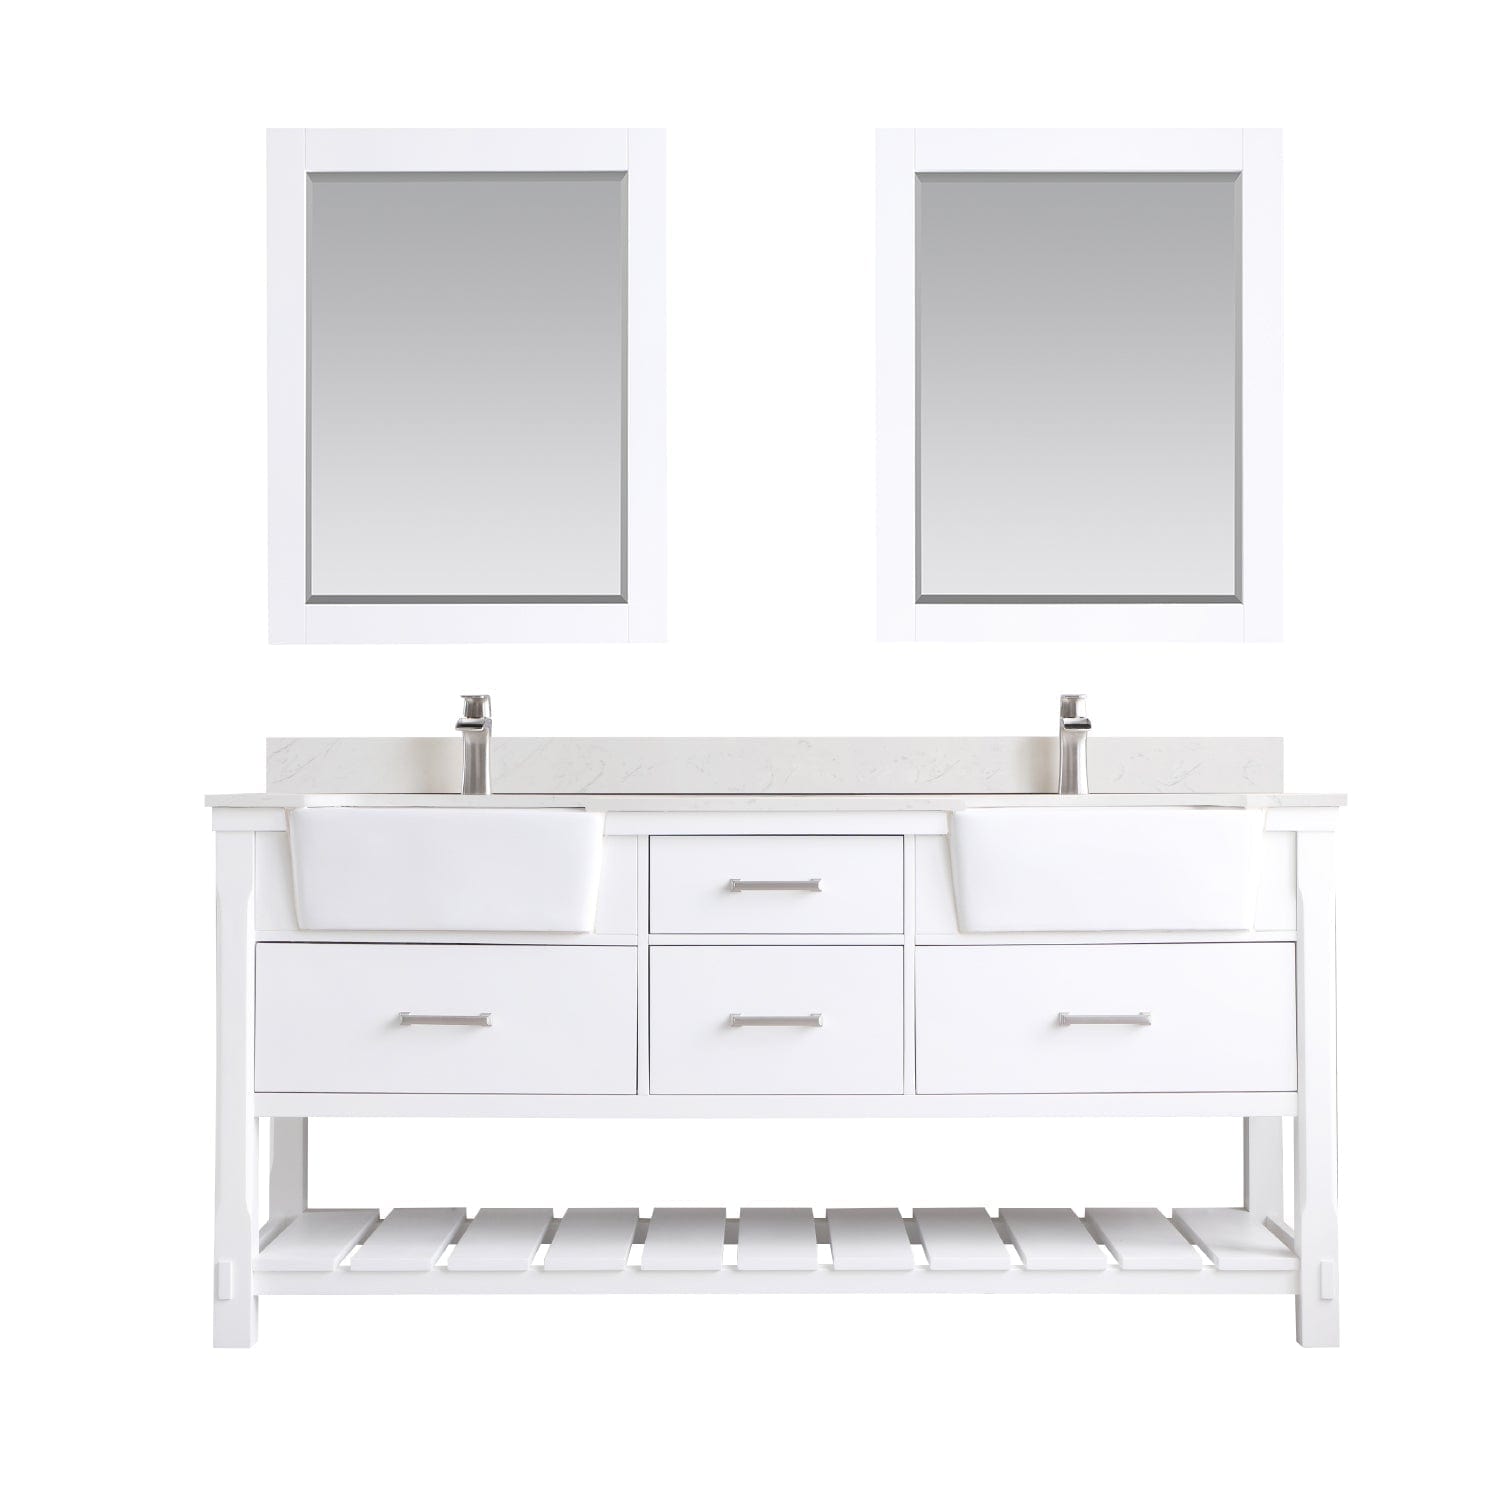 Altair Georgia 72" Double Bathroom Vanity Set in White and Composite Carrara White Stone Top with White Farmhouse Basin with Mirror 537072-WH-AW - Molaix631112970693Vanity537072-WH-AW